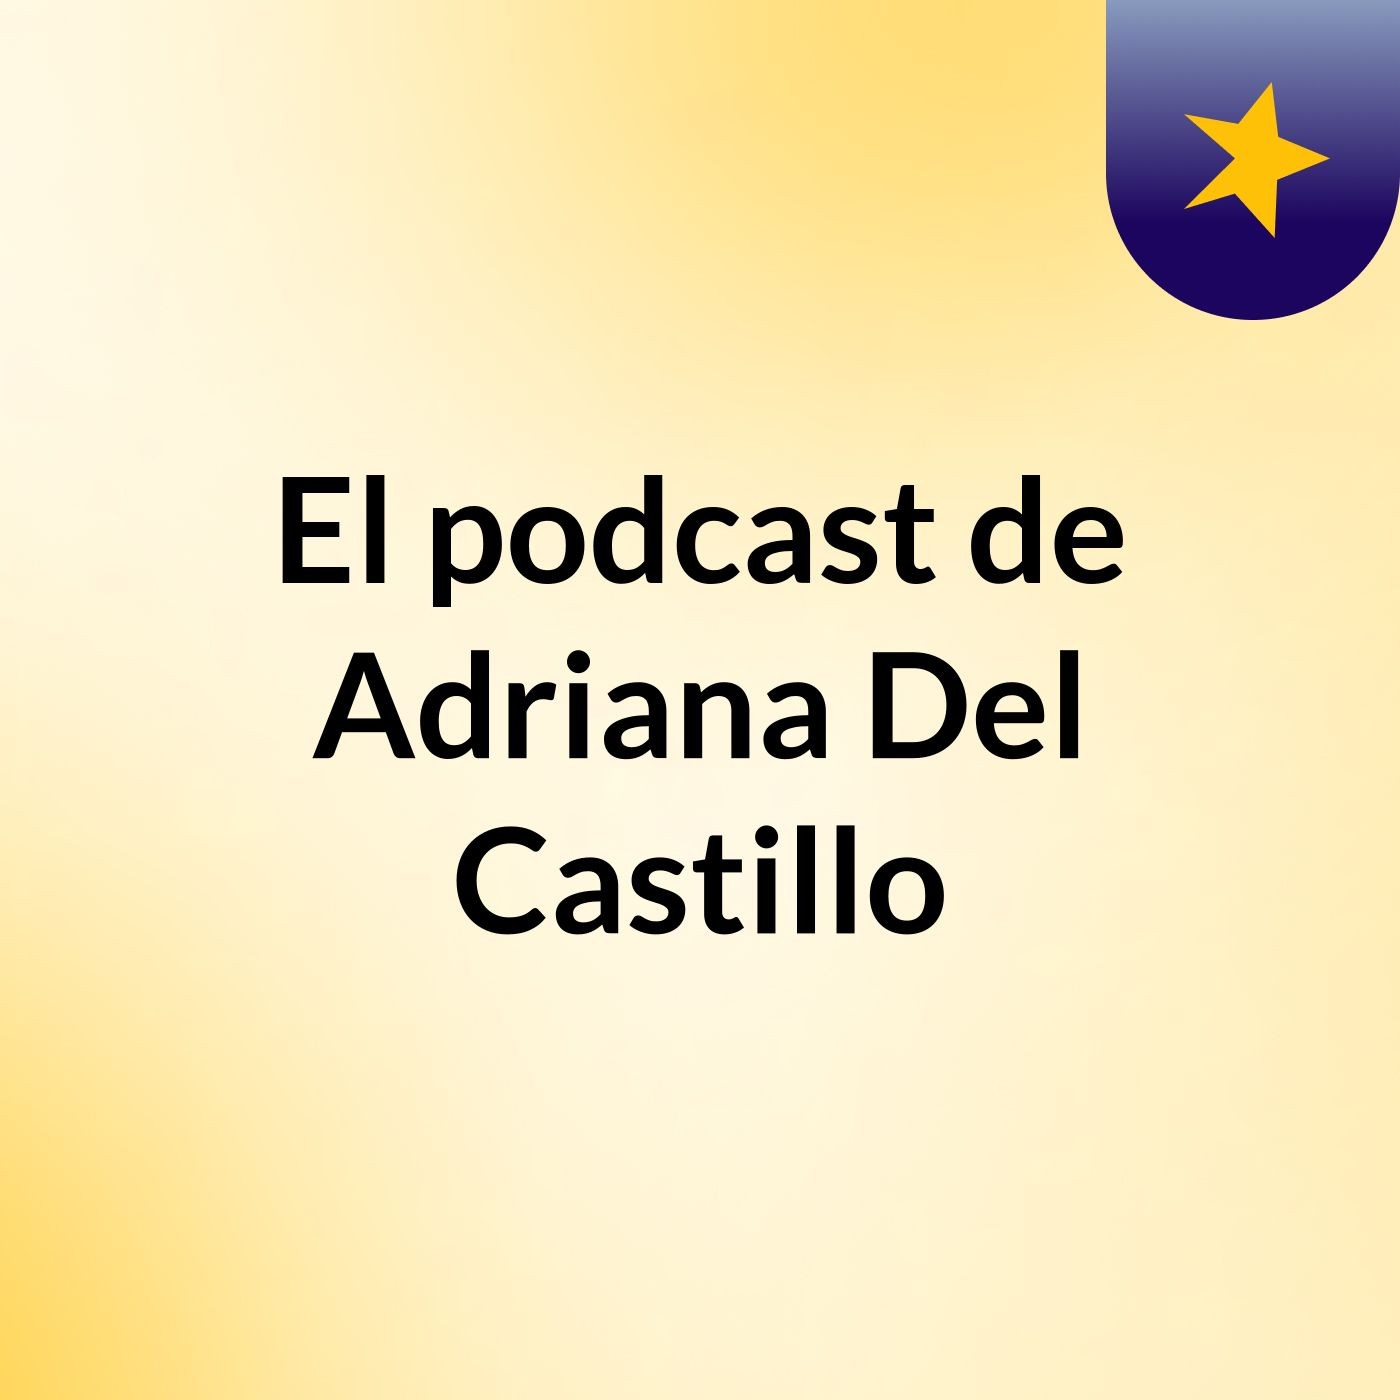 El podcast de Adriana Del Castillo